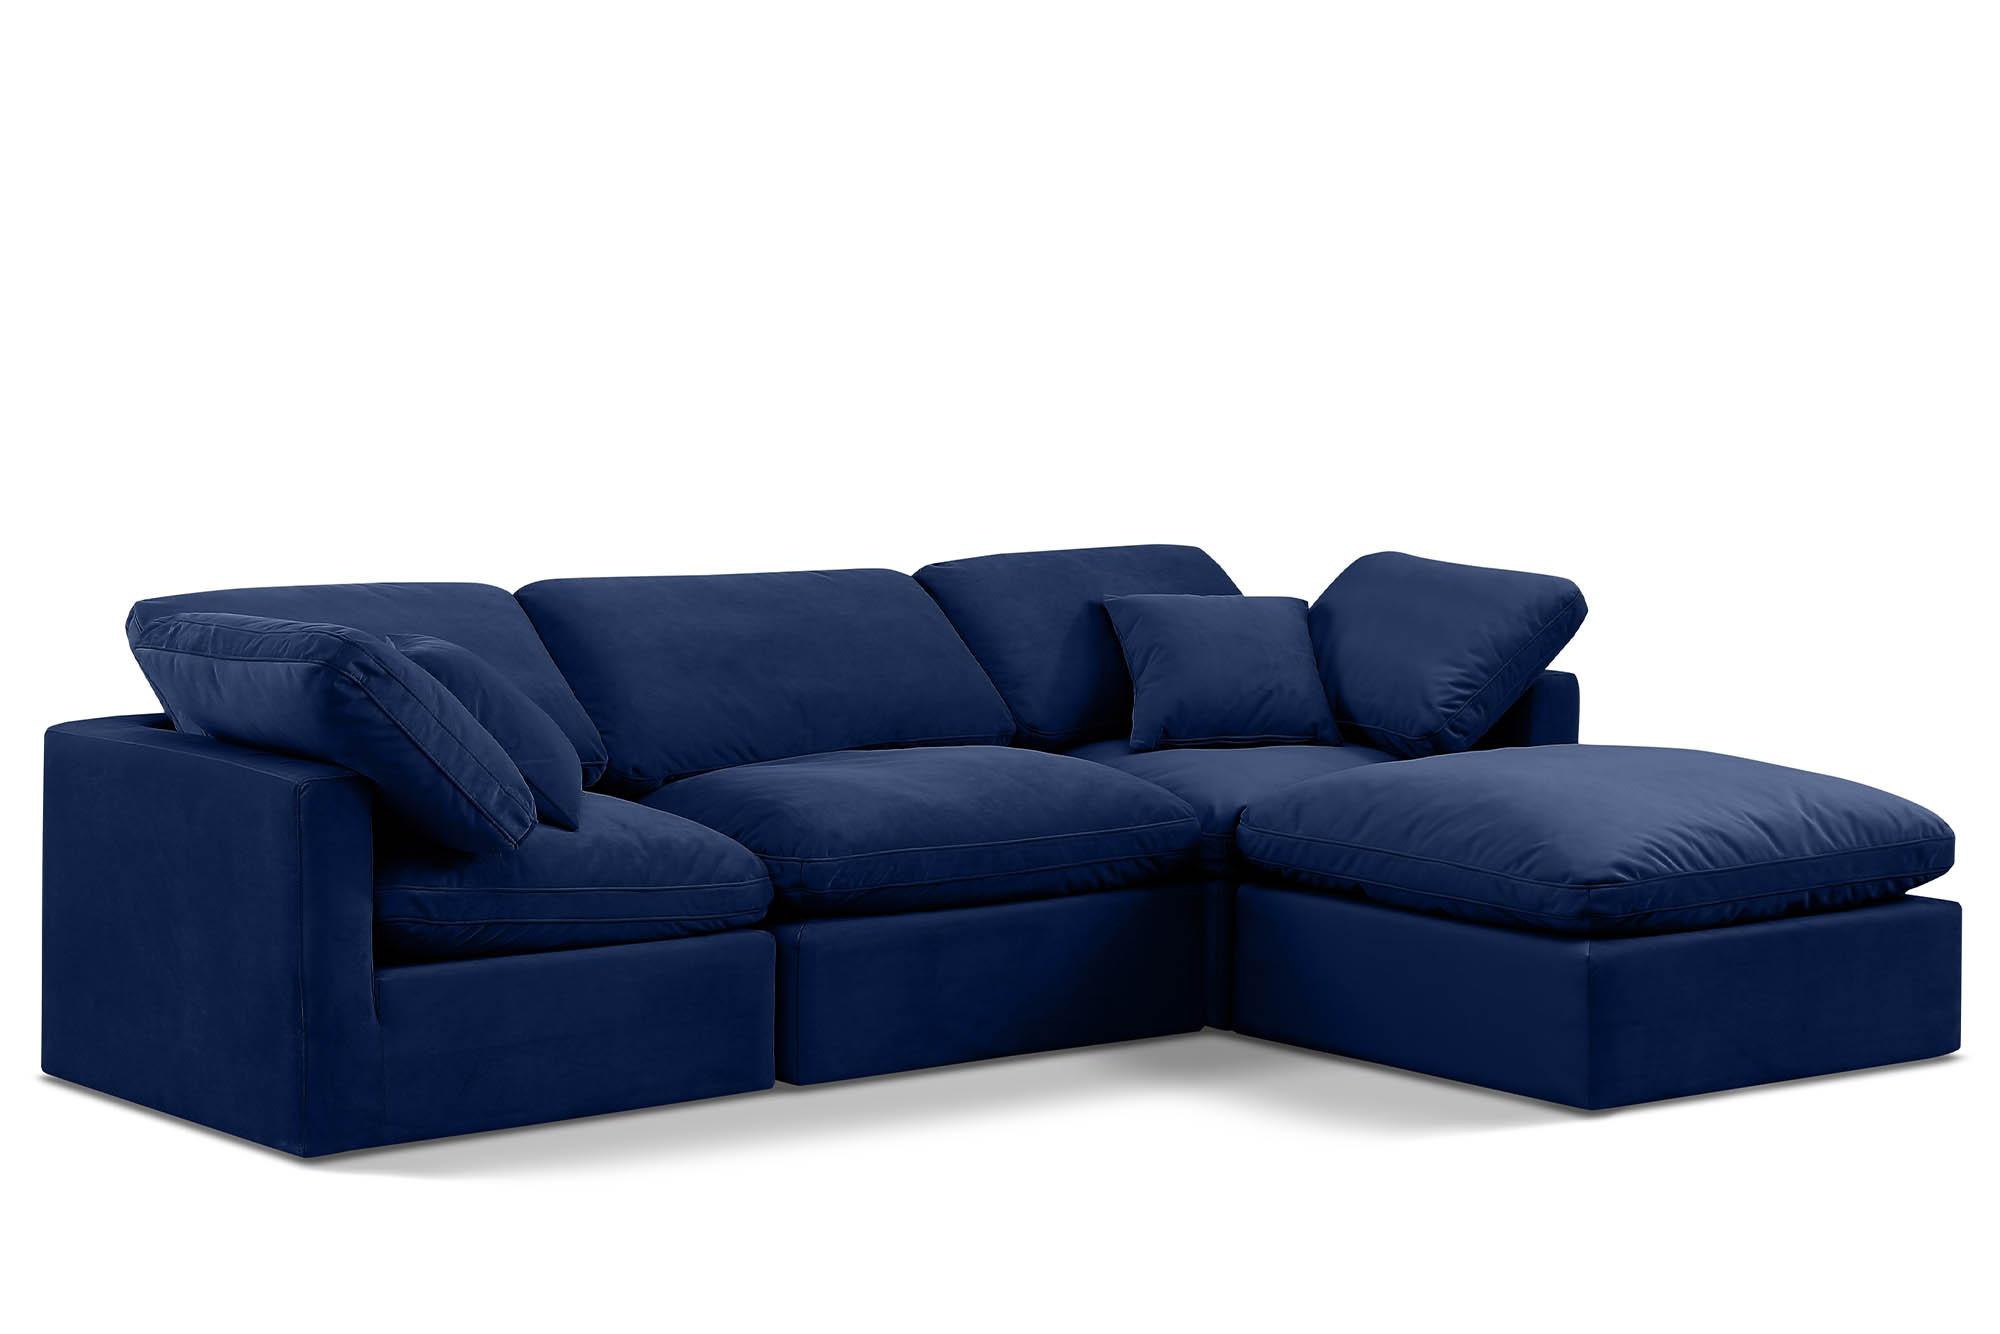 Contemporary, Modern Modular Sectional Sofa INDULGE 147Navy-Sec4A 147Navy-Sec4A in Navy Velvet